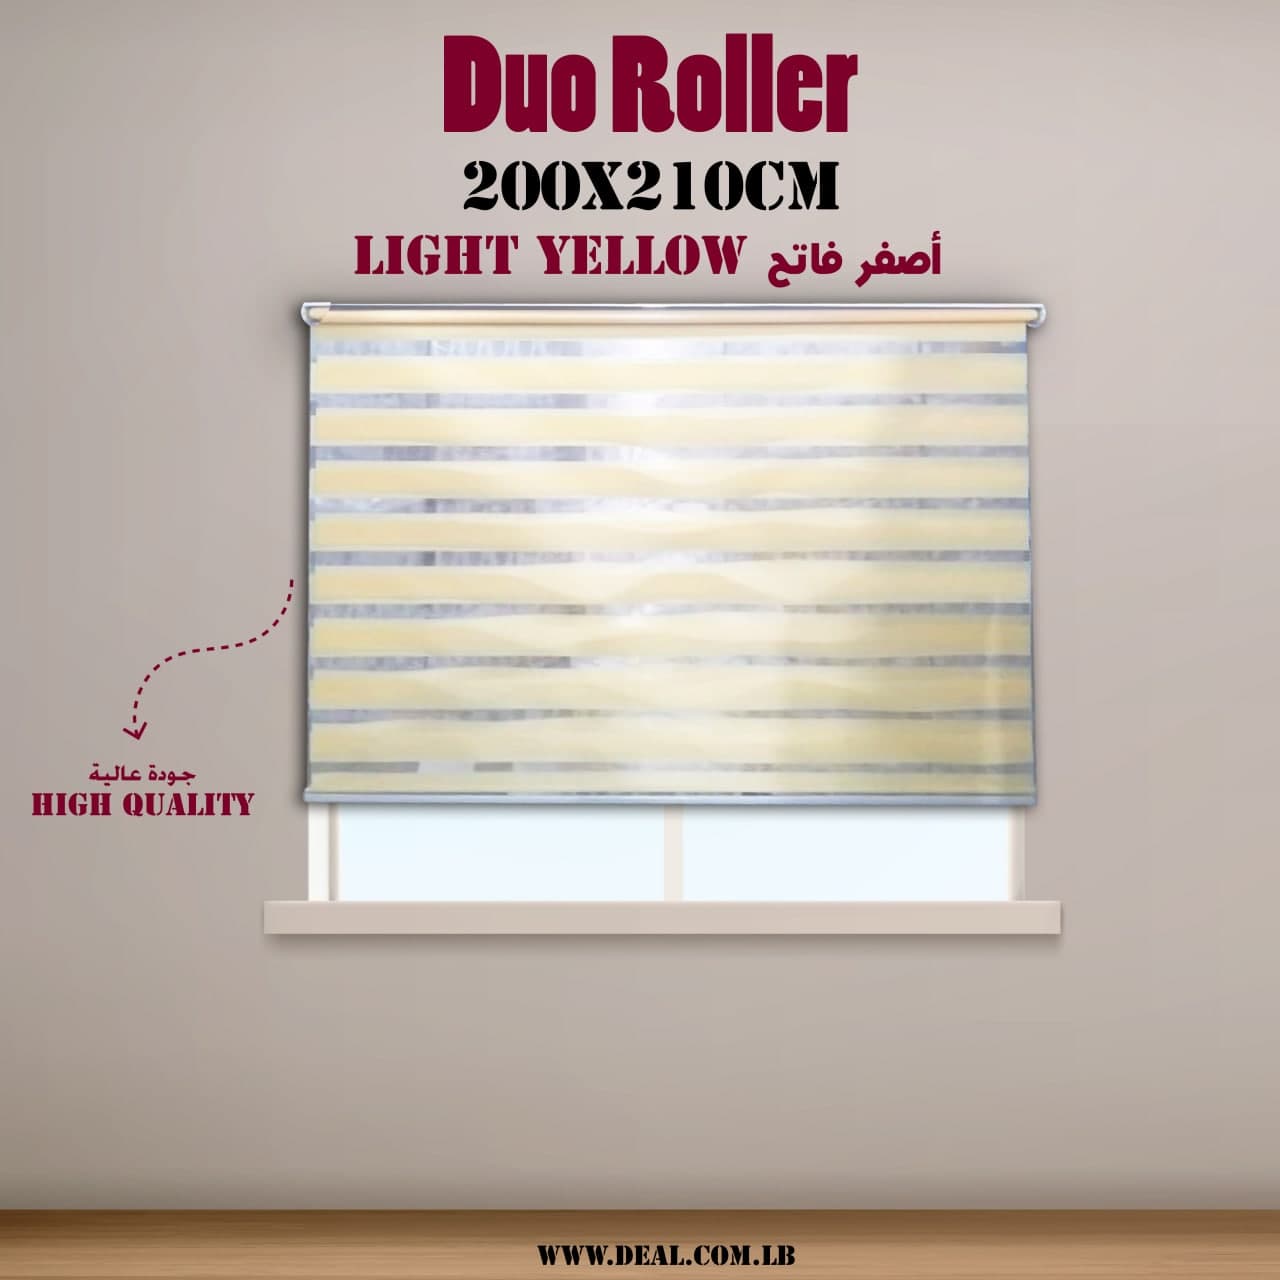 Light+Yellow+Duo+Roller+Curtain+200x210cm